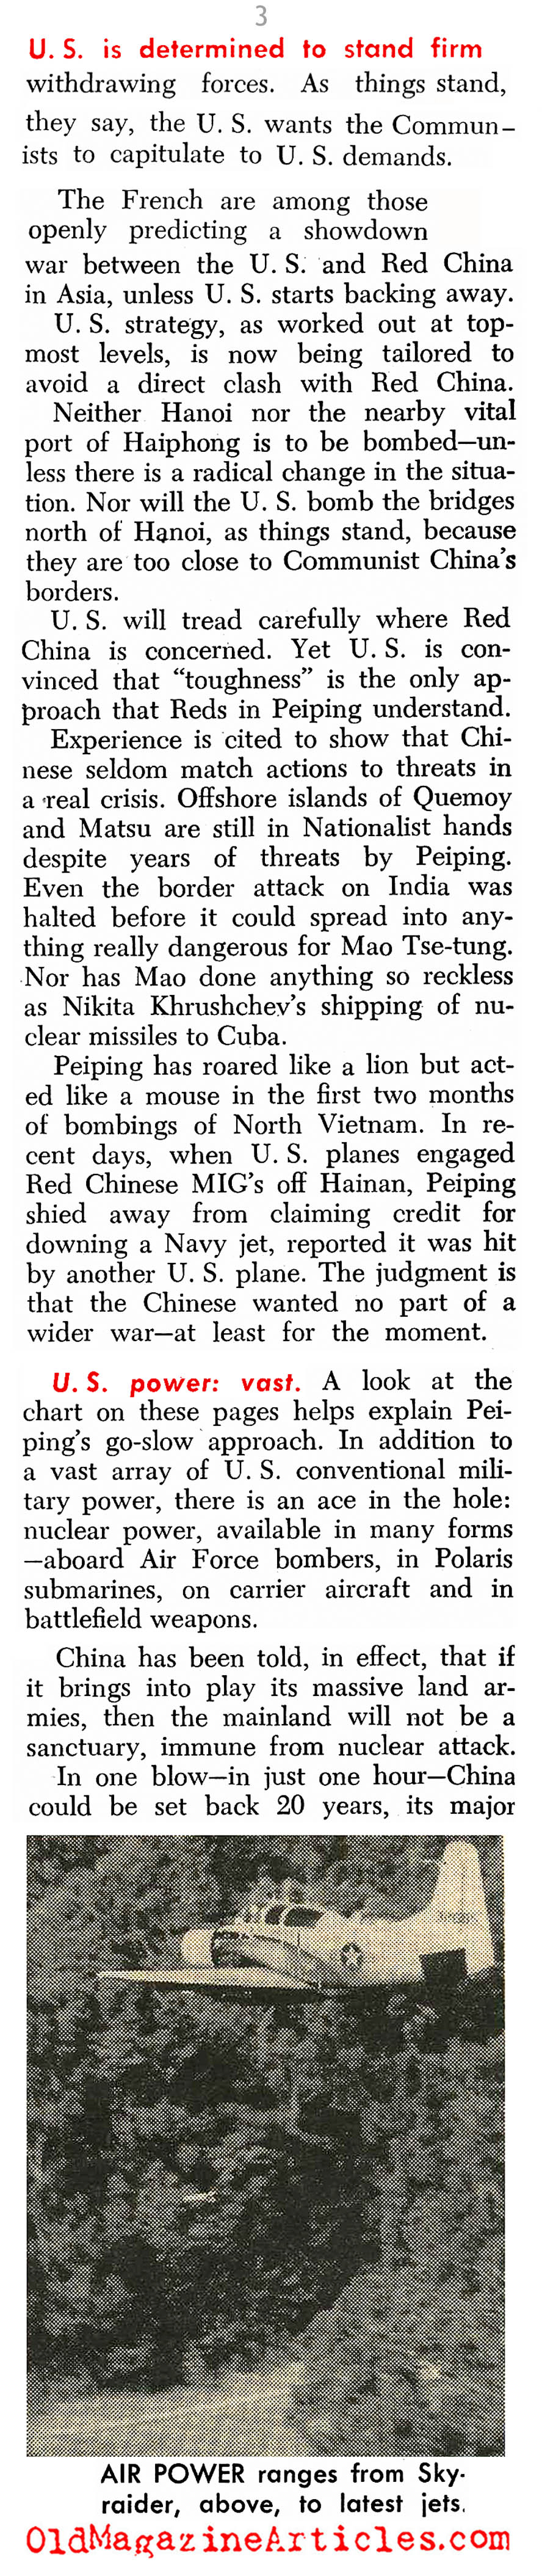 American Resolve Made Manifest  (U.S. News & World Report, 1965)